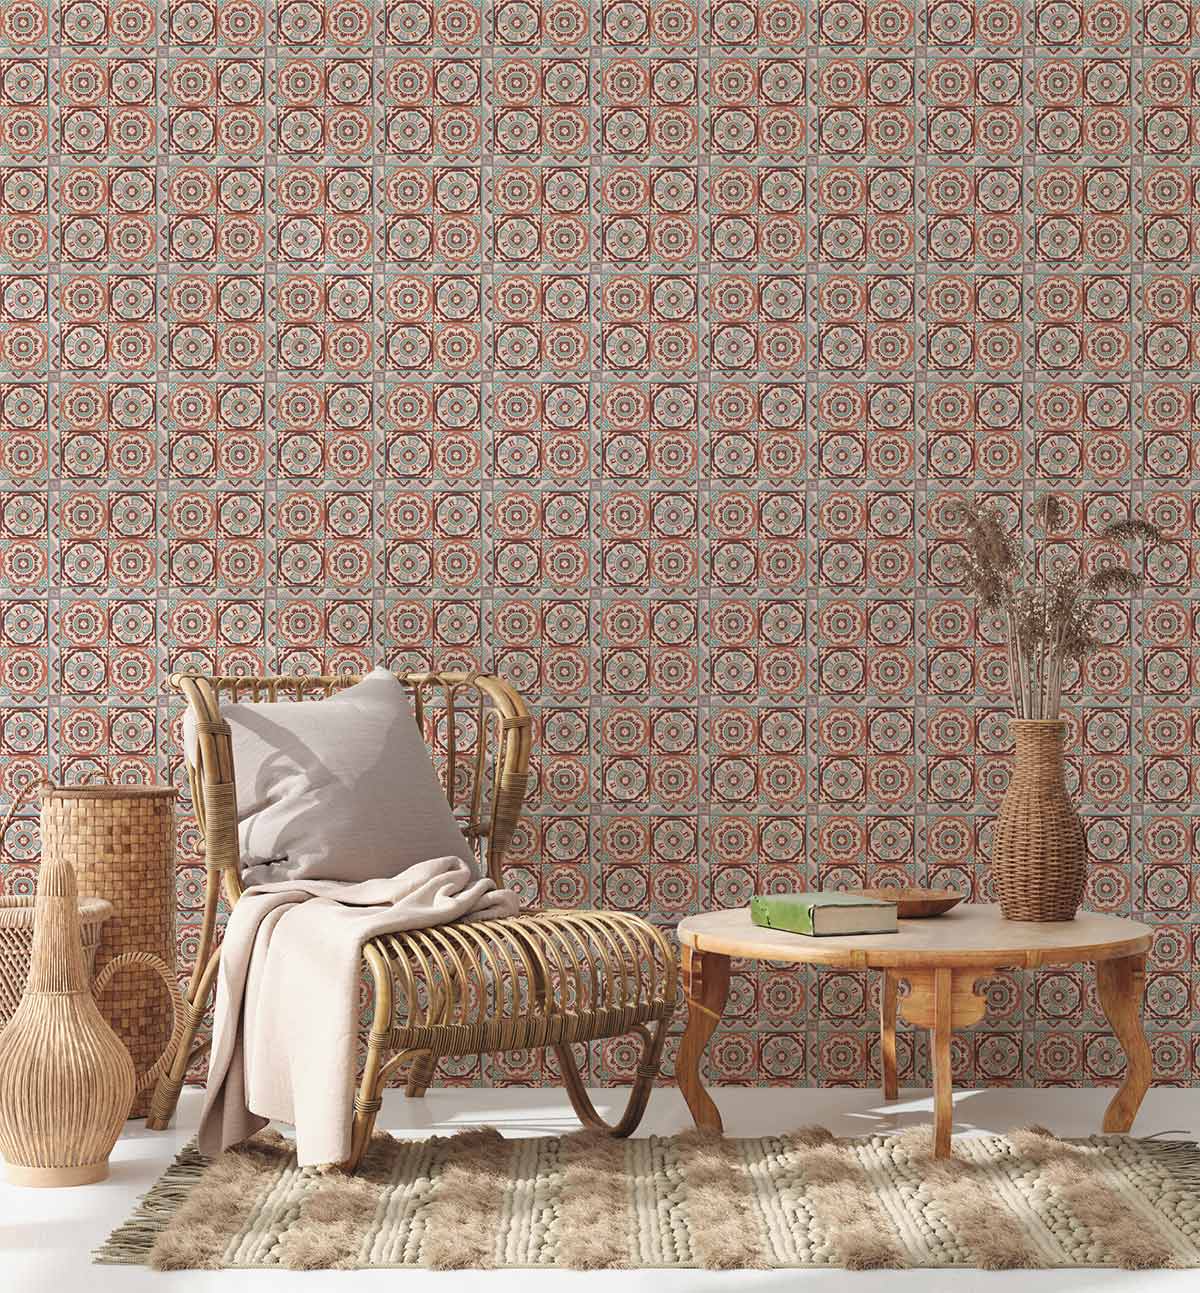 Dizzy Circle Pattern Wallpaper Decoration Design